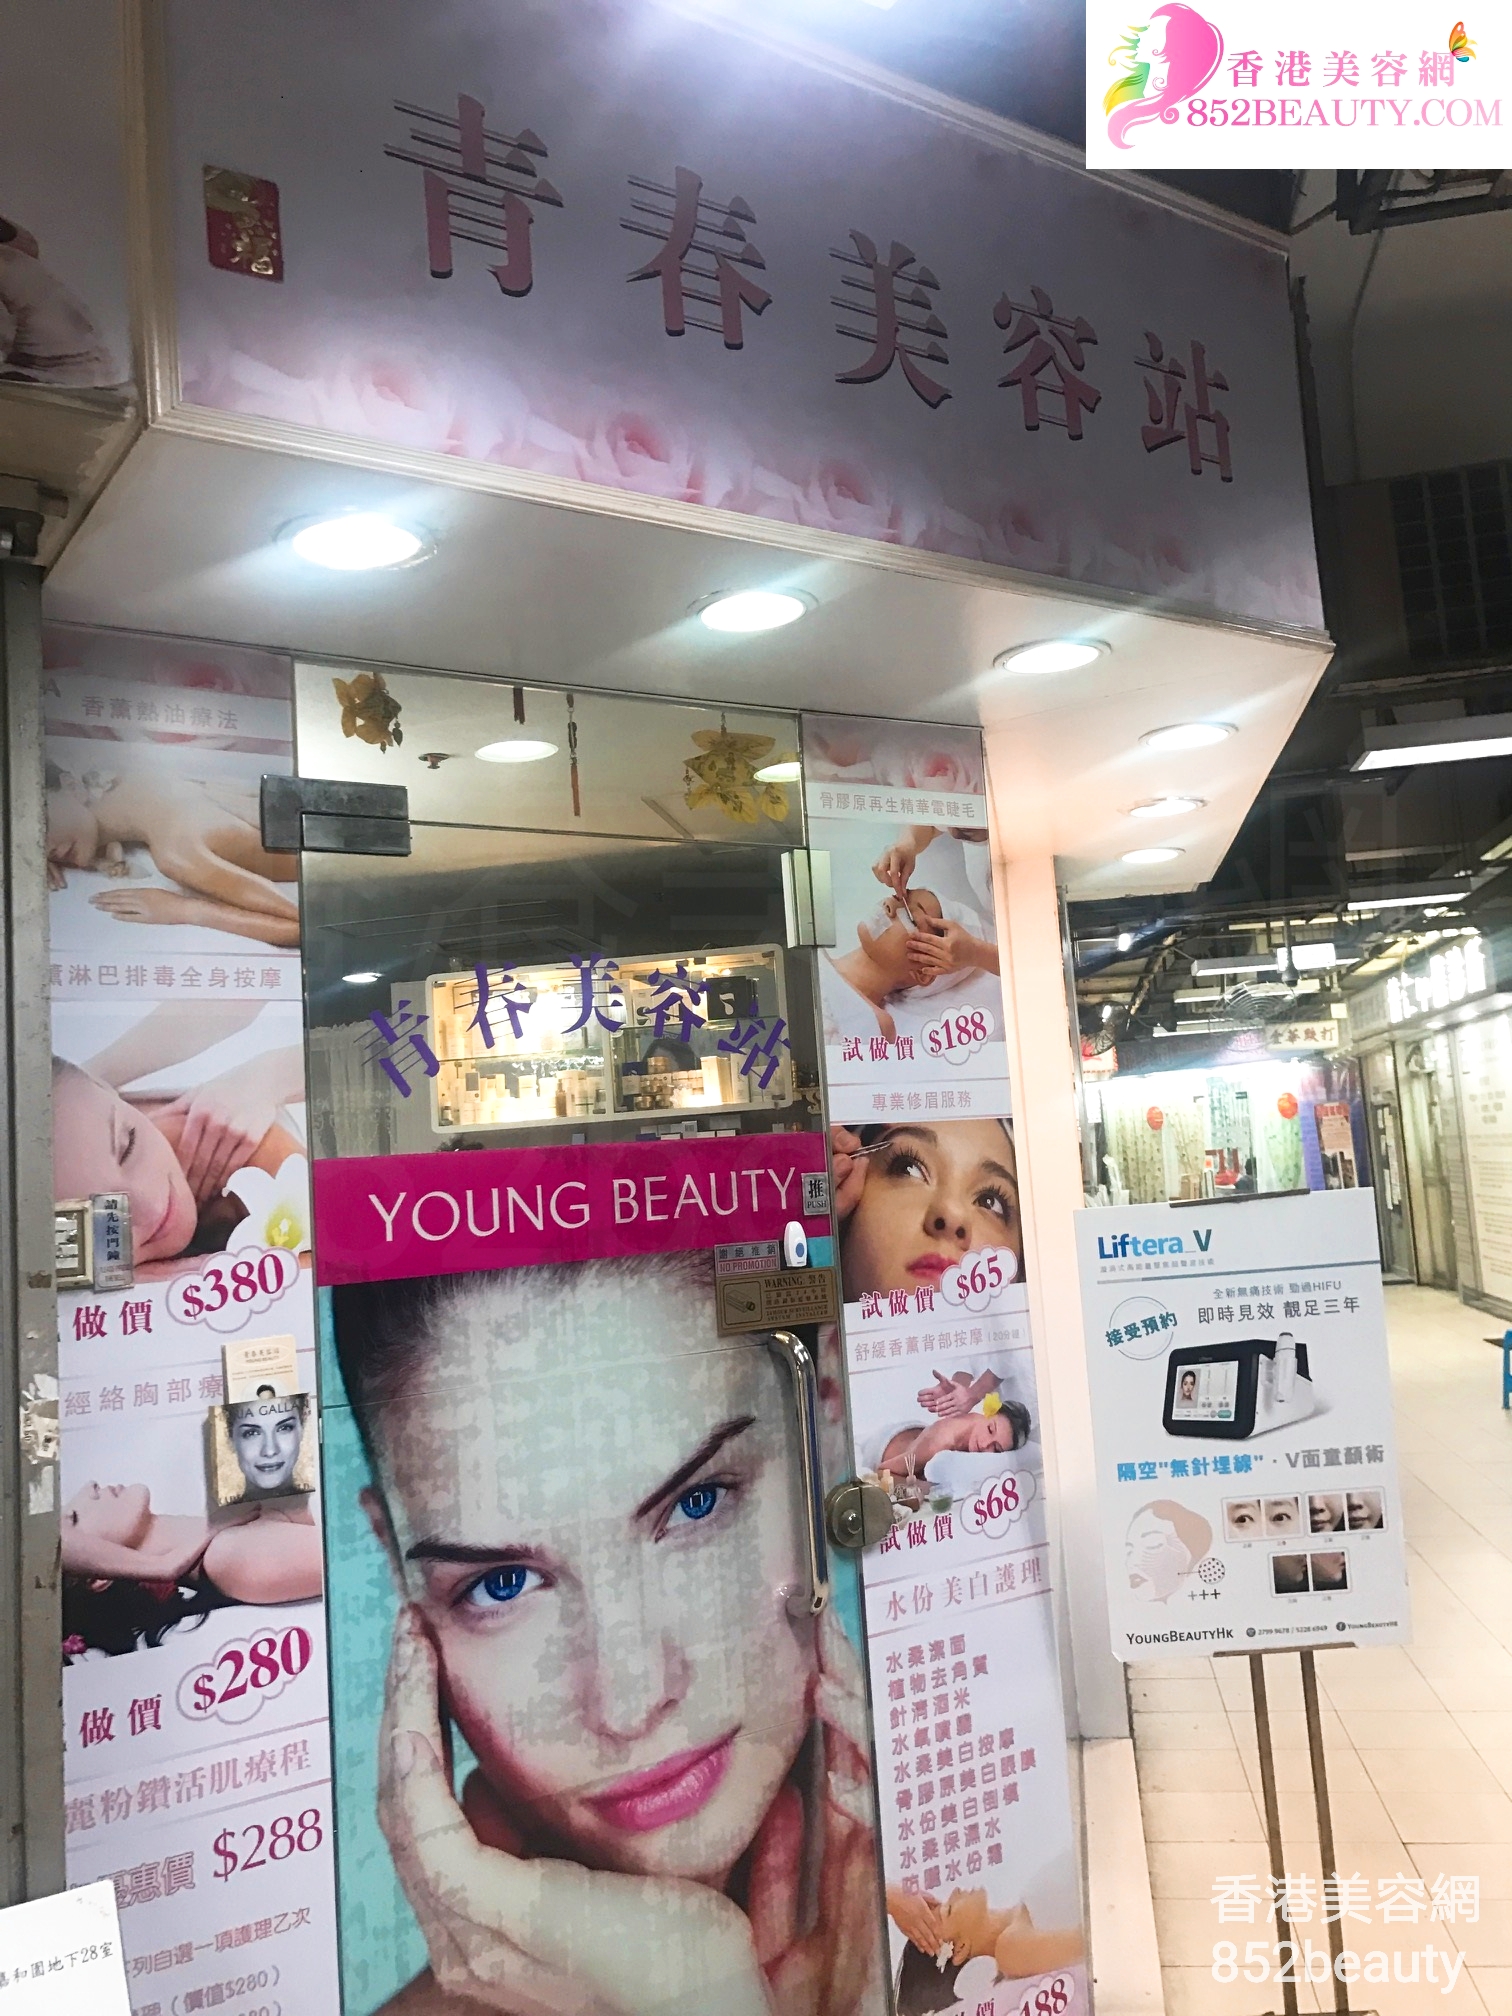 香港美容網 Hong Kong Beauty Salon 美容院 / 美容師: 青春美容站 Young Beauty